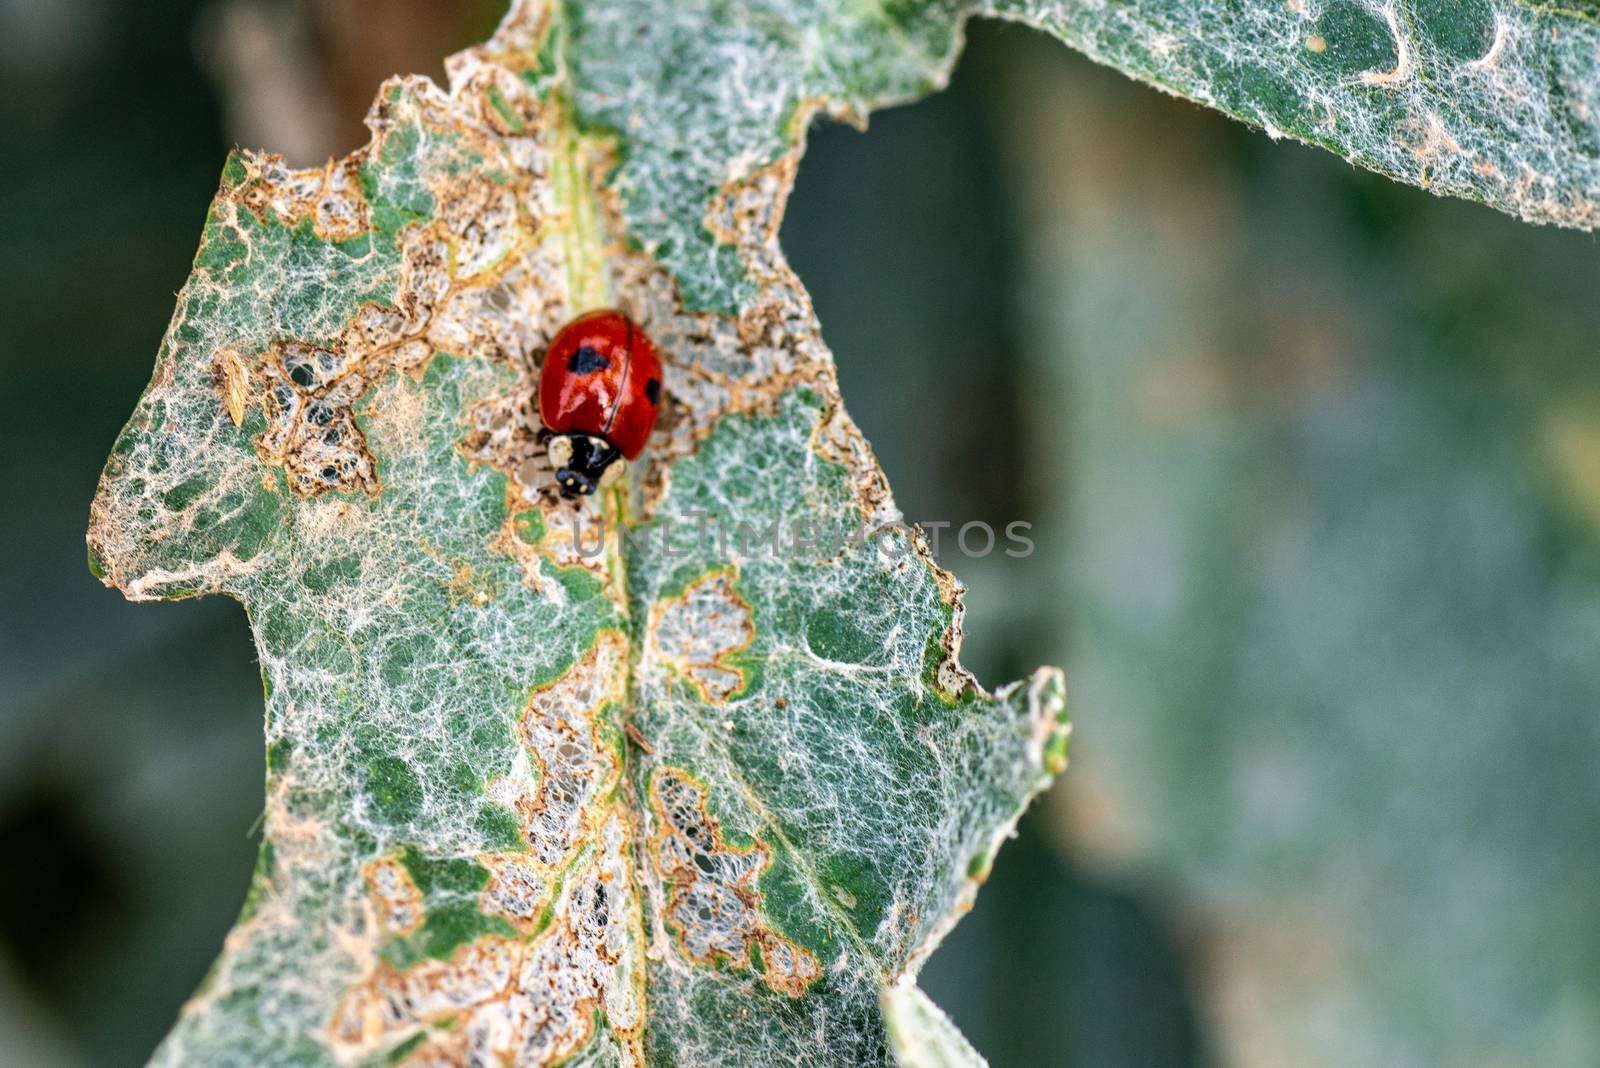 ladybug on artichoke plant